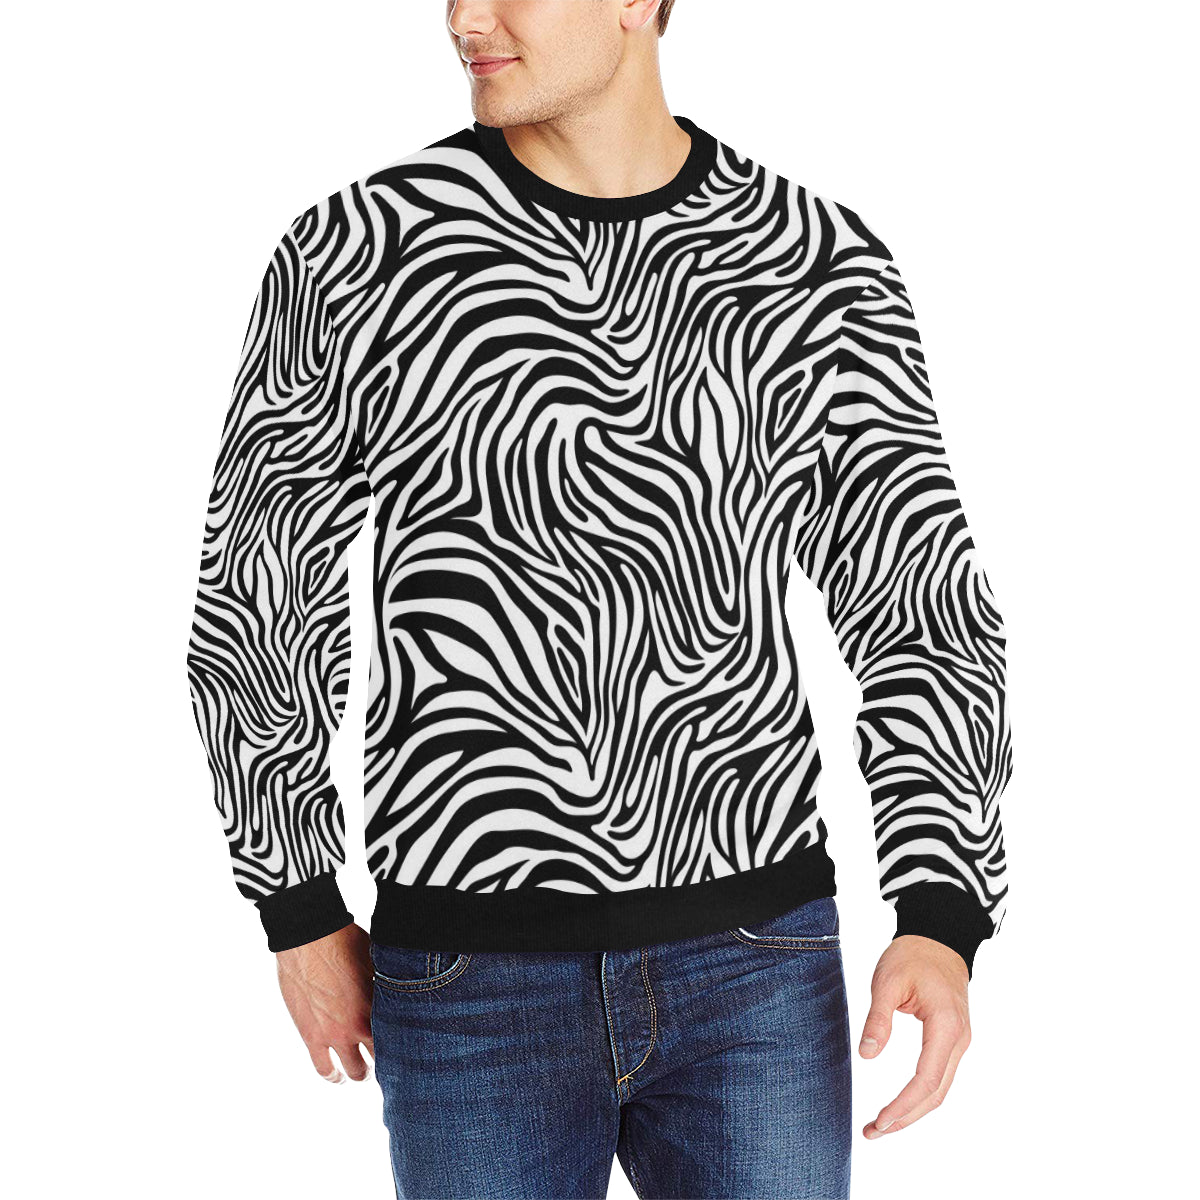 Zebra skin pattern Men’s Crew Neck Sweatshirt